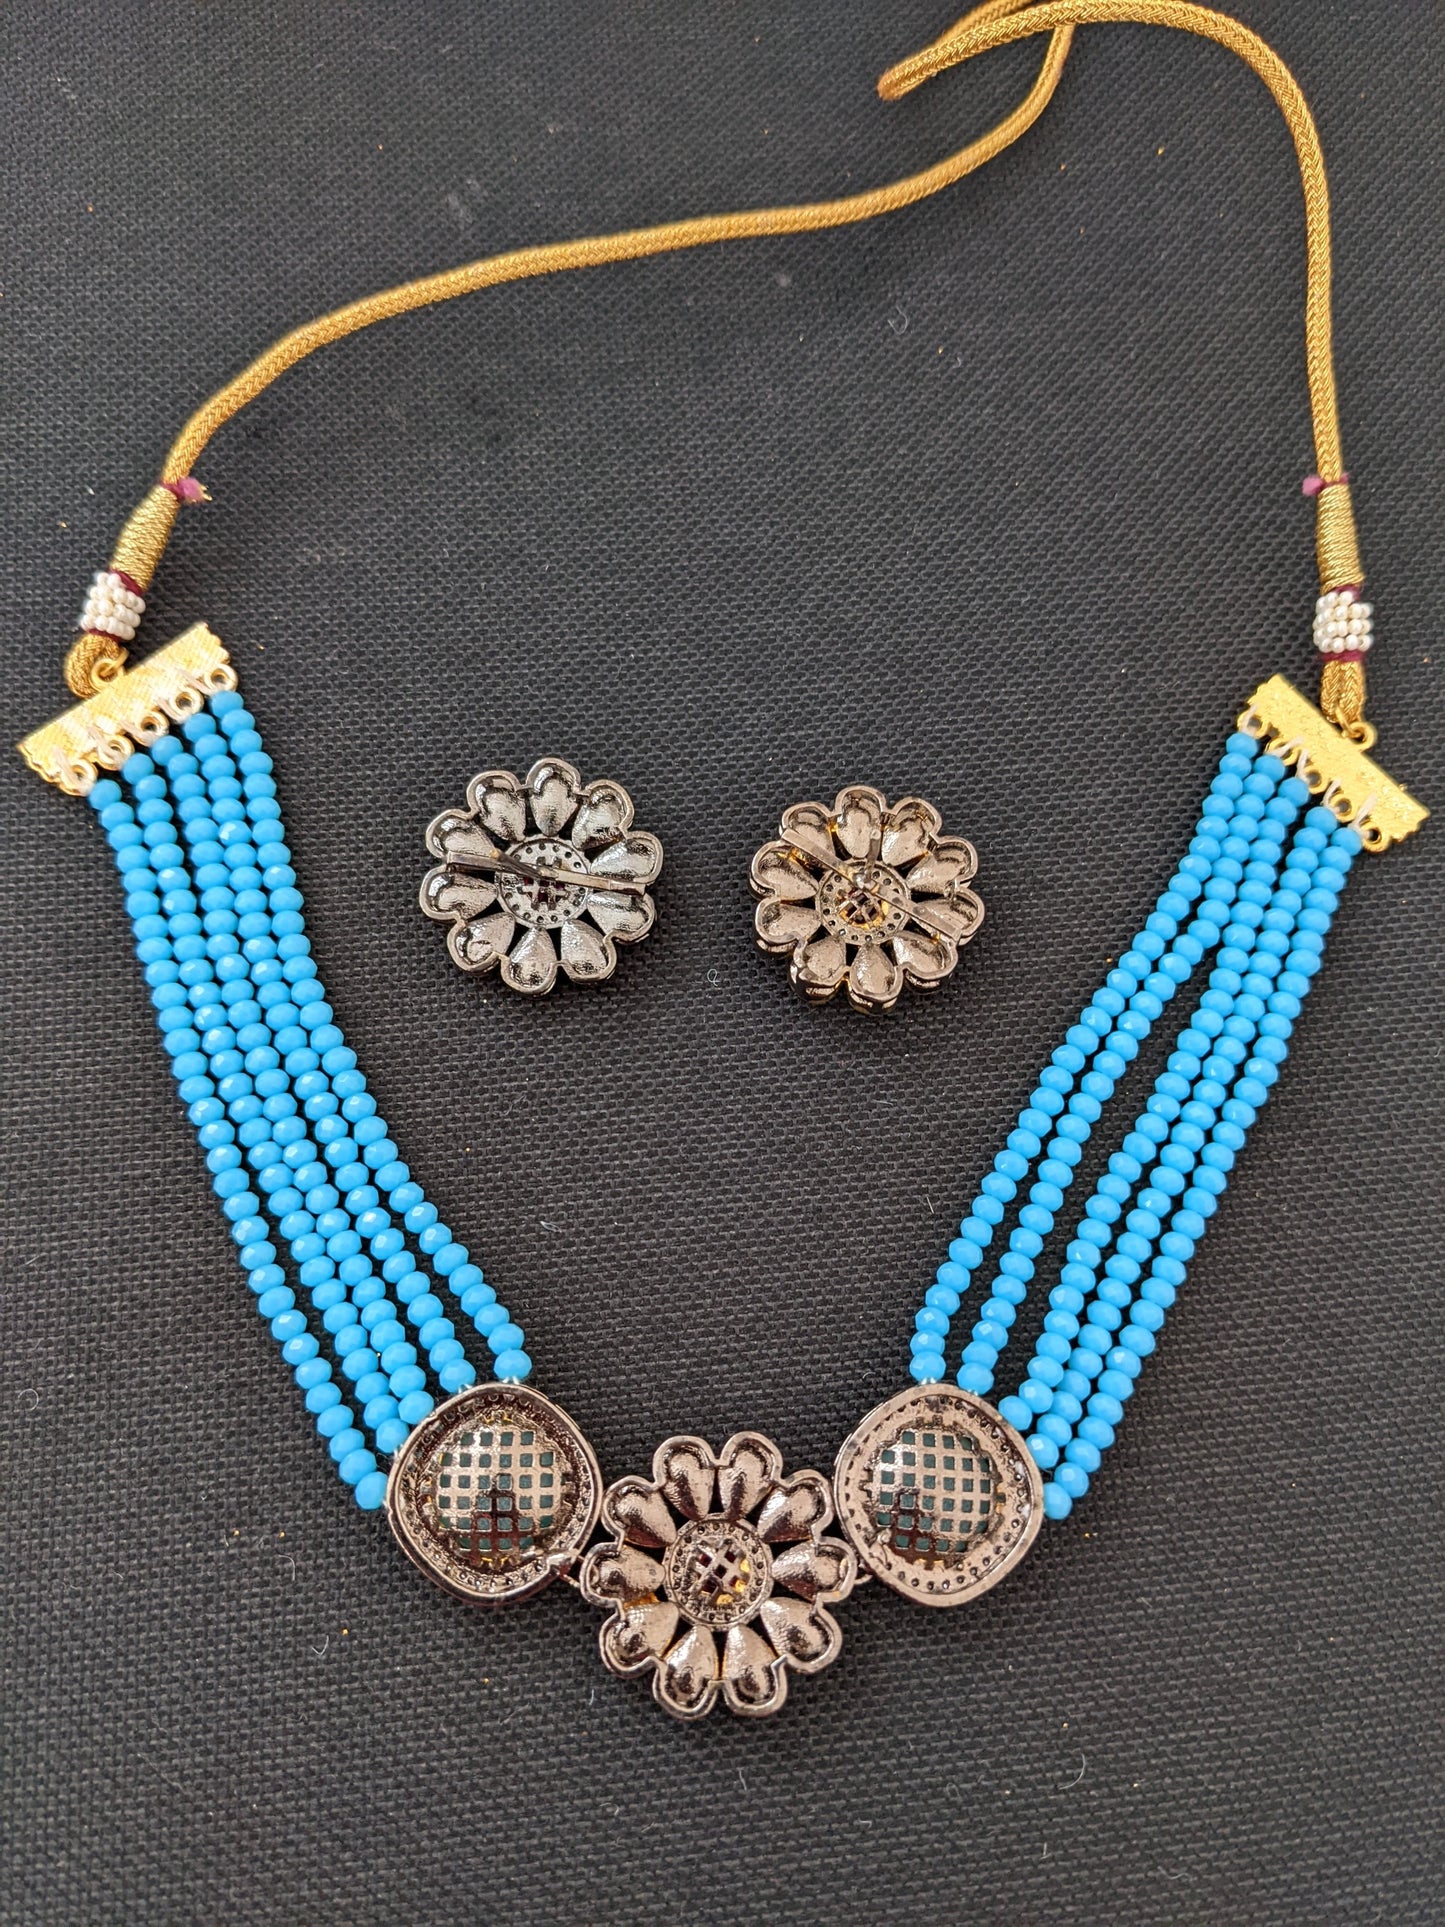 Kundan flower pendant with Light blue crystal bead choker necklace and stud earring set - Simpliful